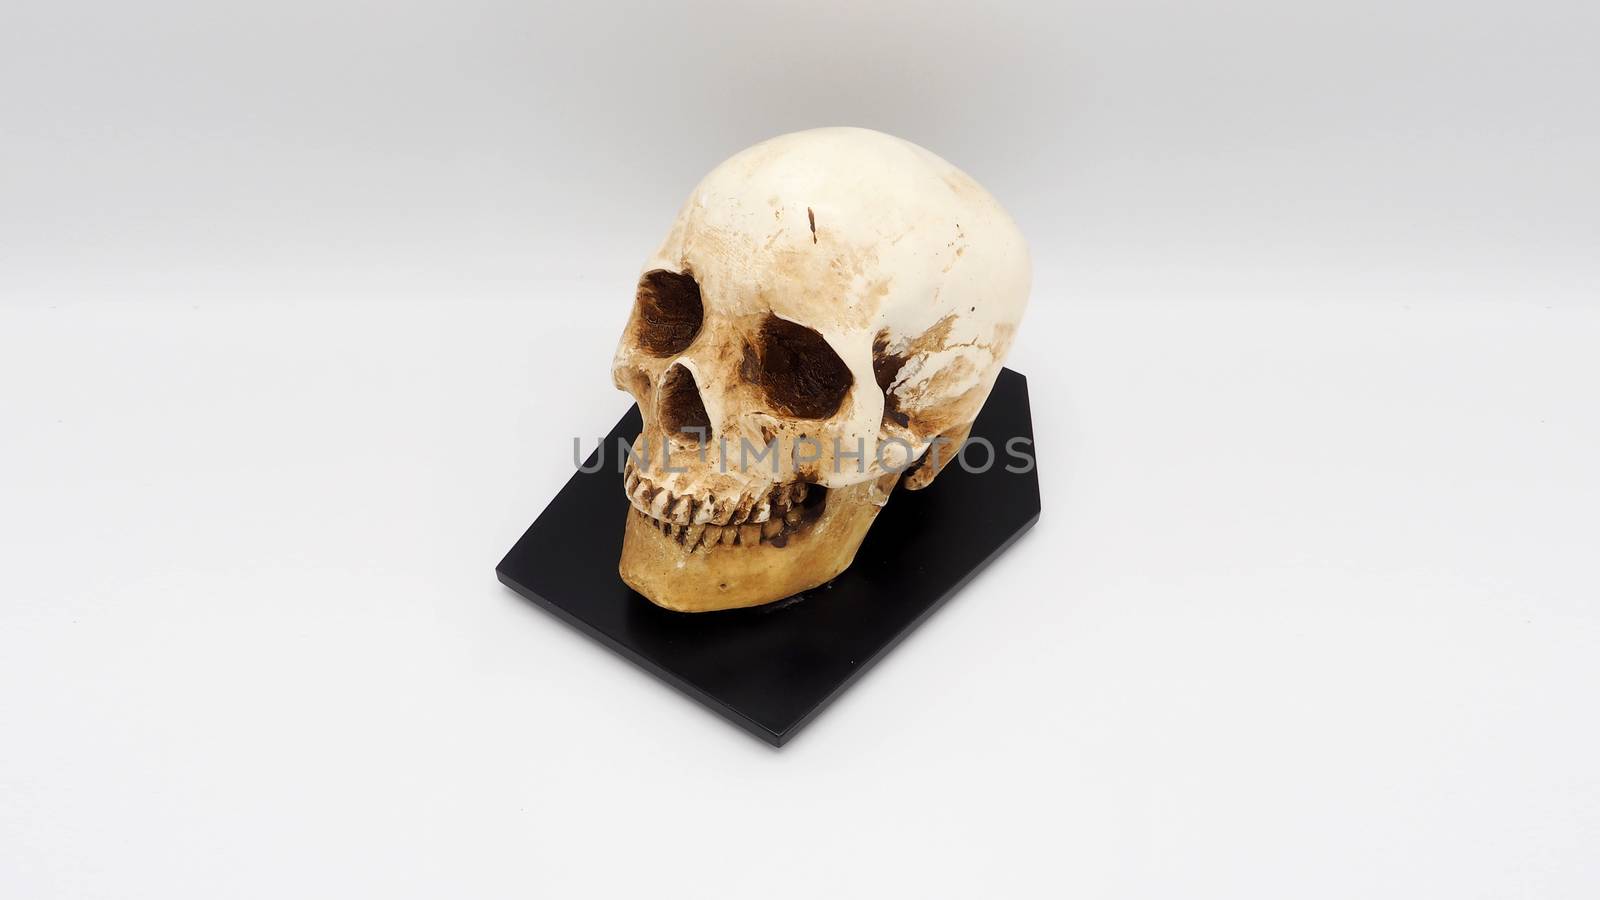 Human skull head model made from rasin plastic. by gnepphoto